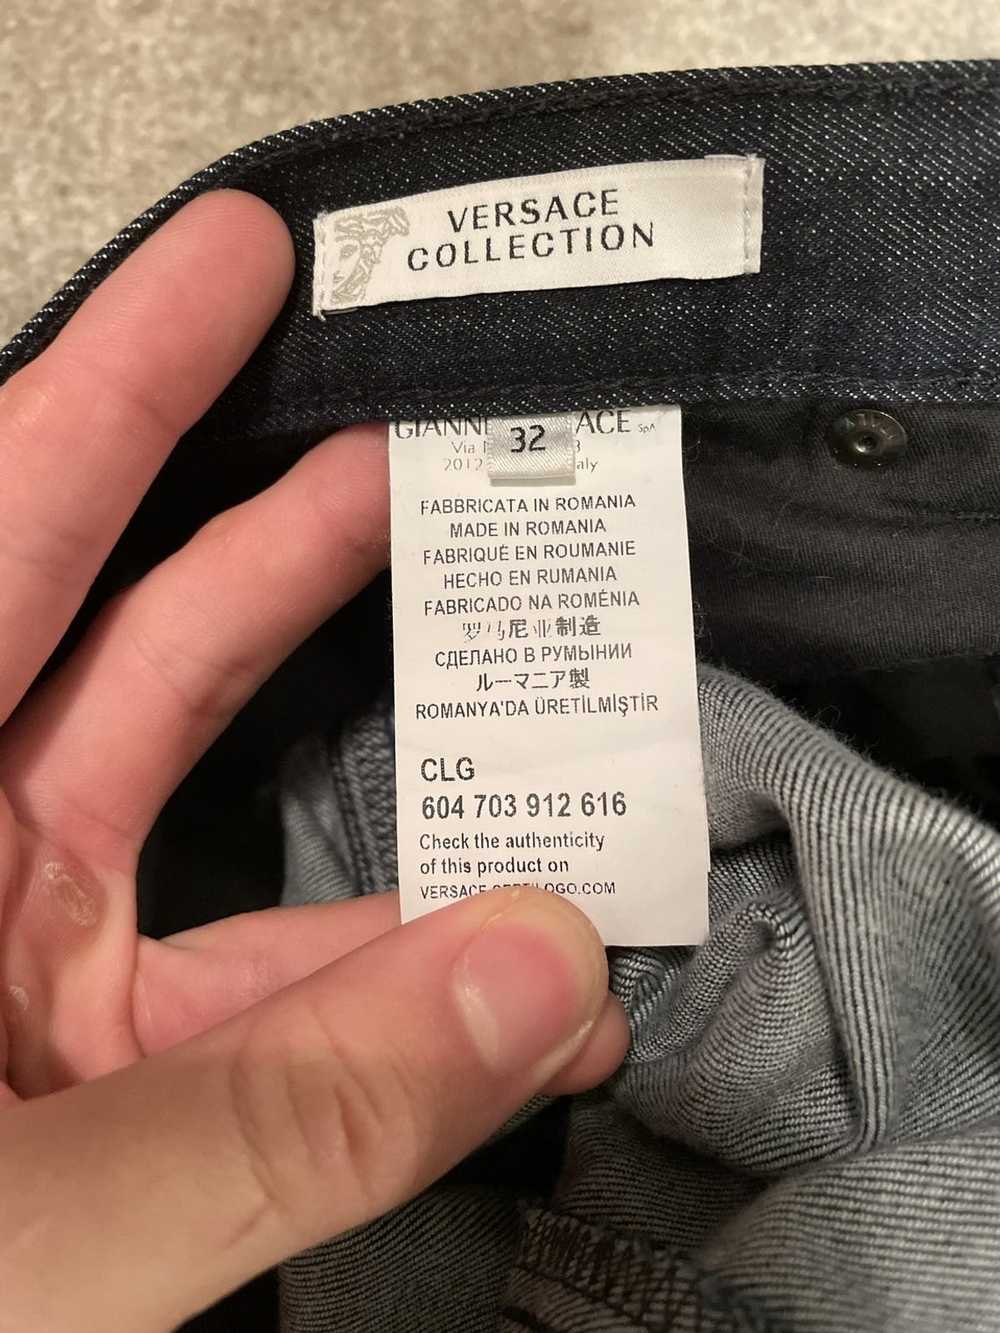 Versace Versace (versace collection) jeans - image 4